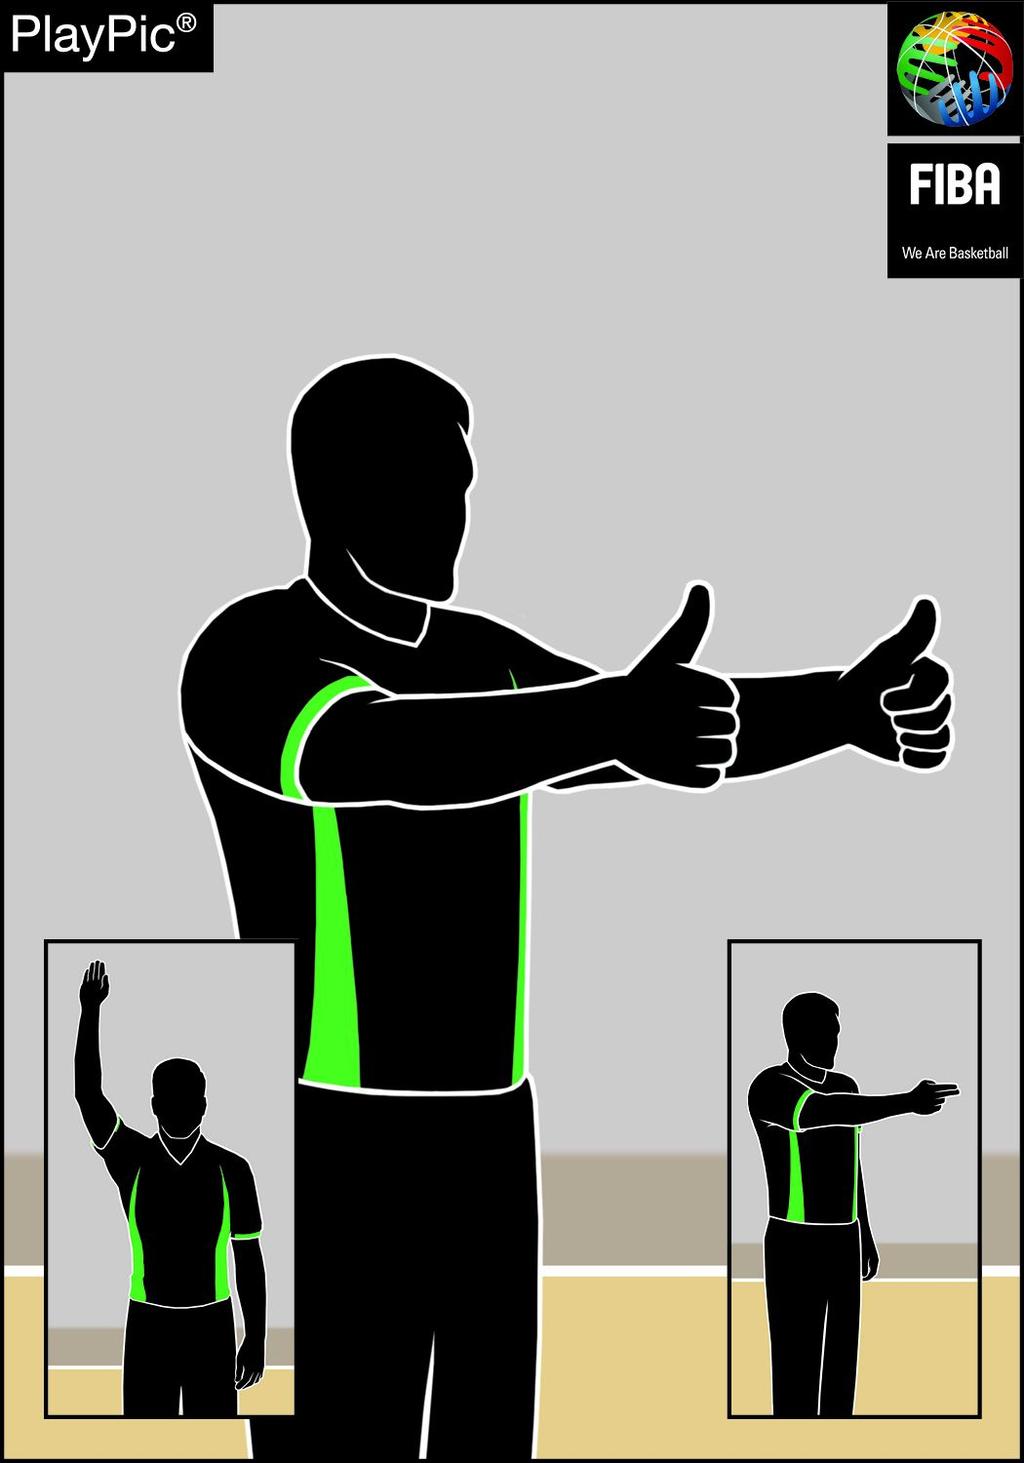 Signals / held ball jump ball situation Thumbs up followed